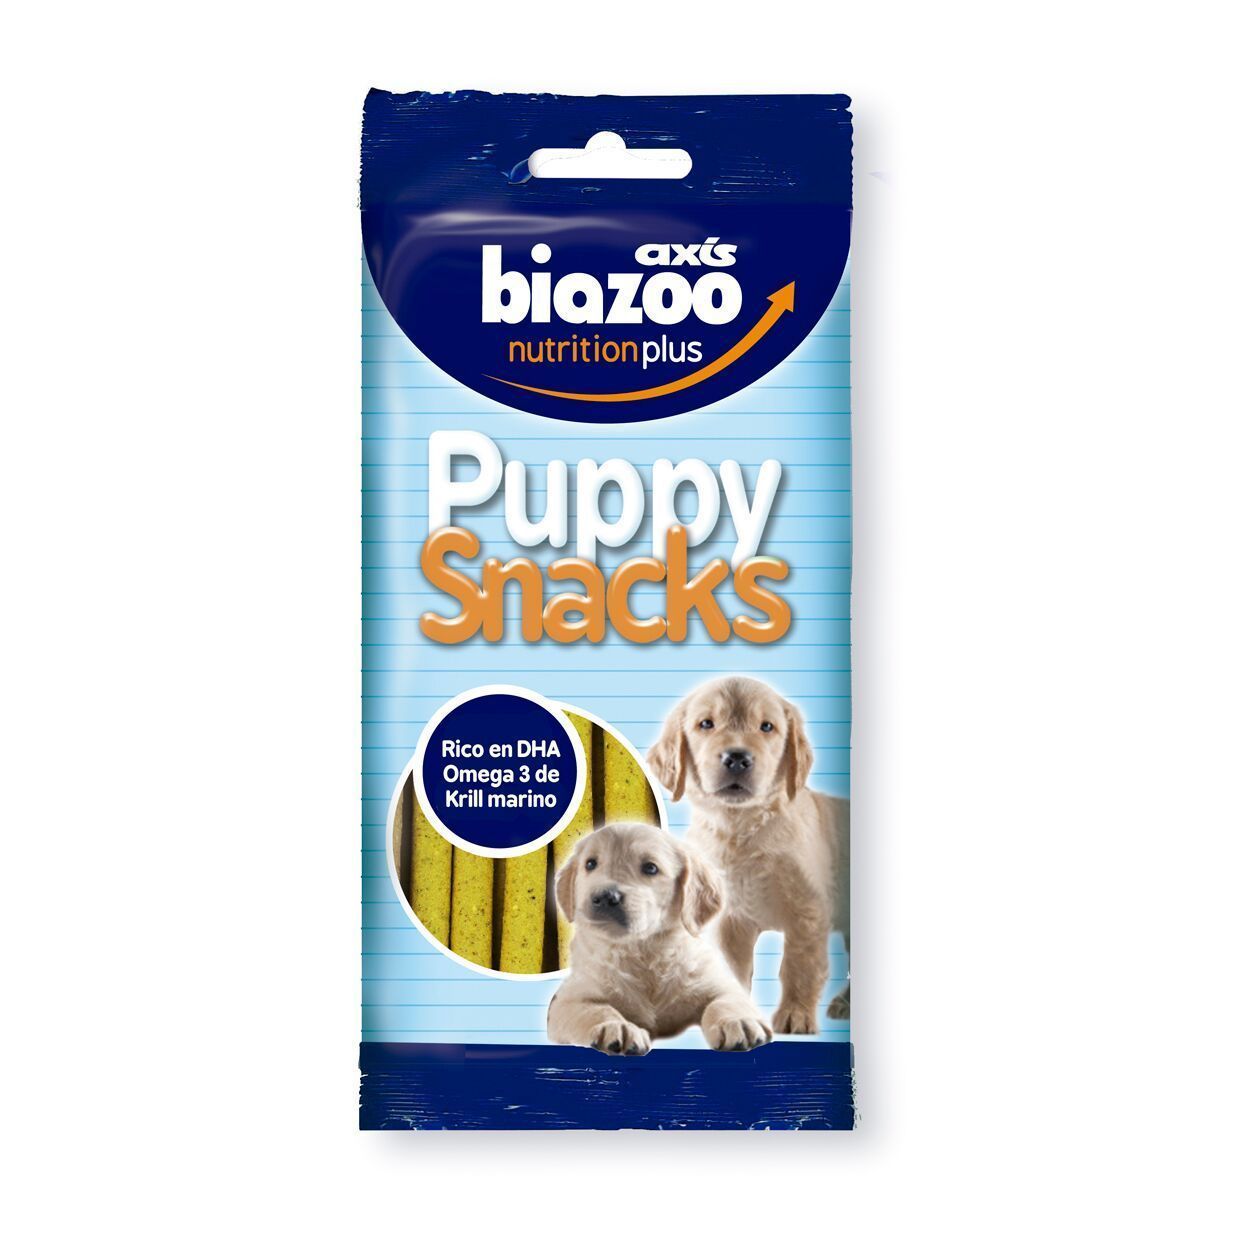 Puppy snacks-Snacks-Biozoo-200 grs.-Biozoopets